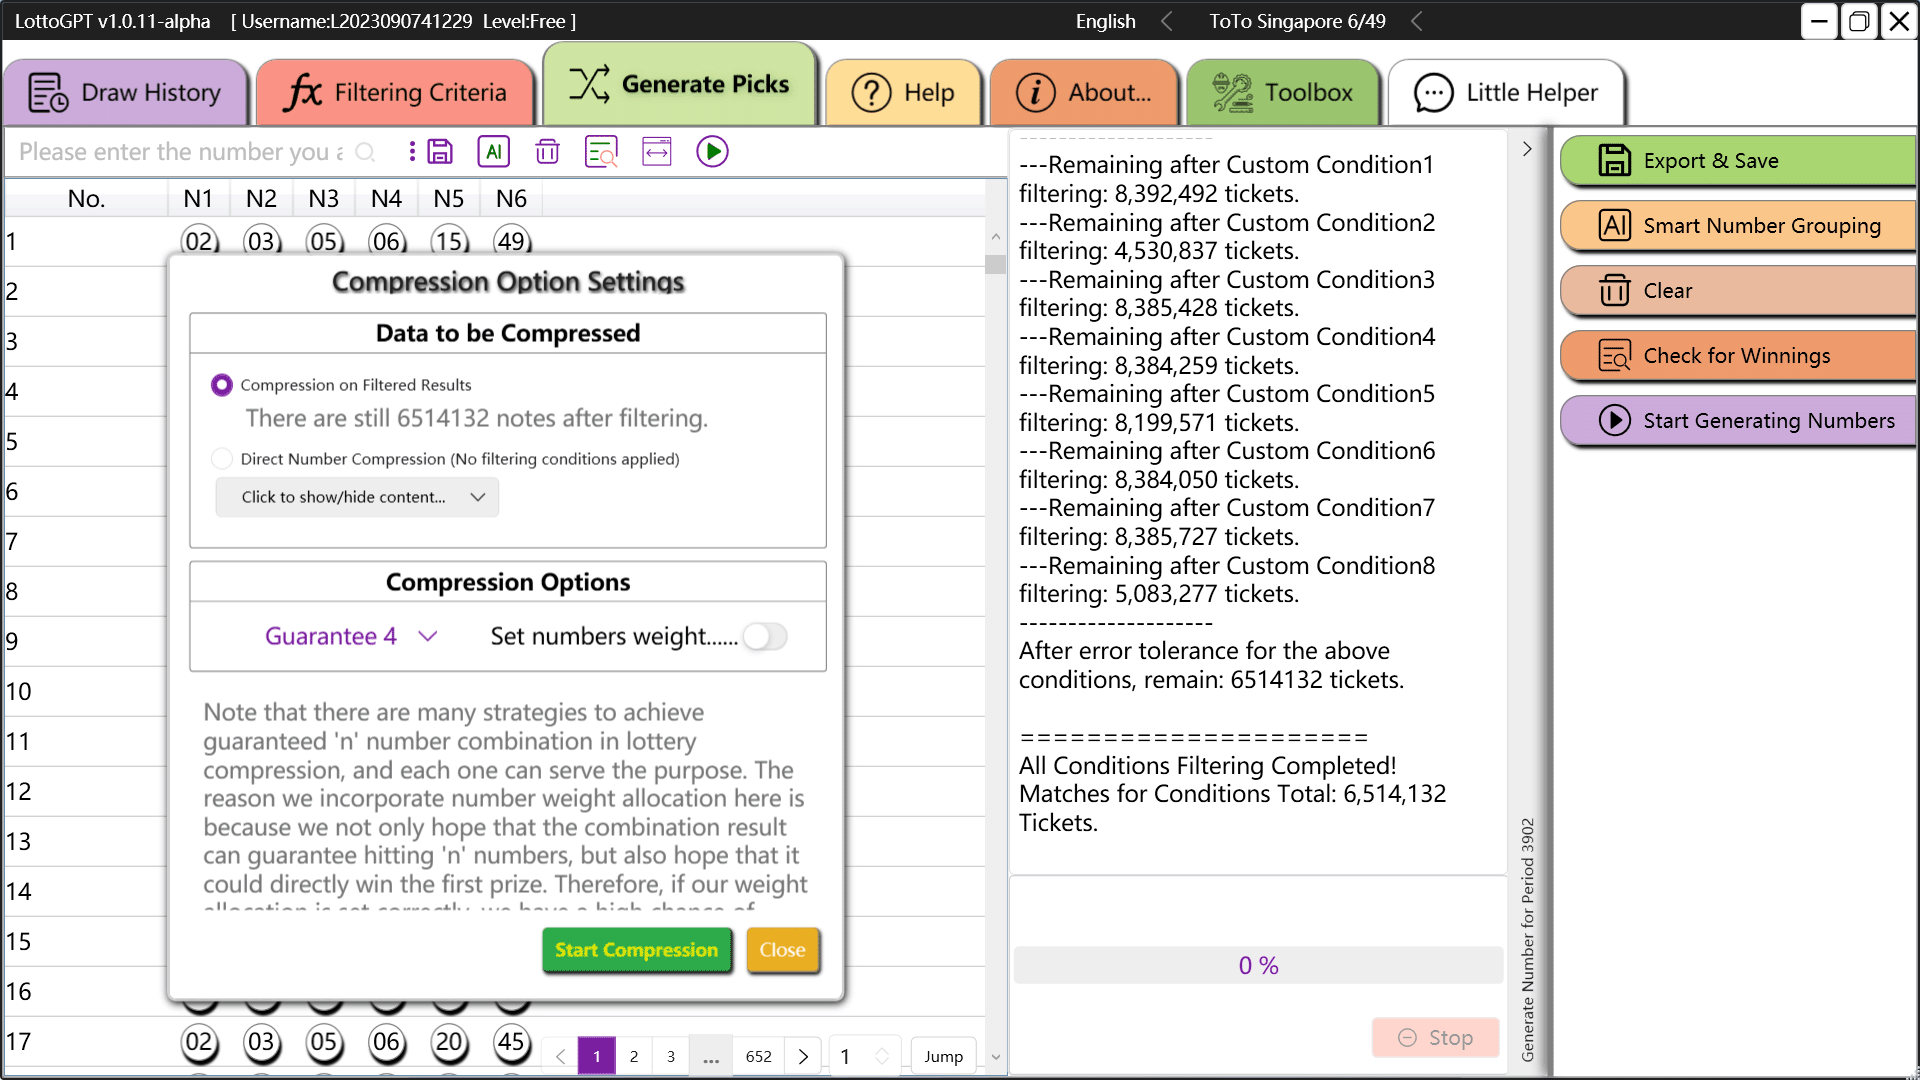 screenshot of lottoGPT interface 11